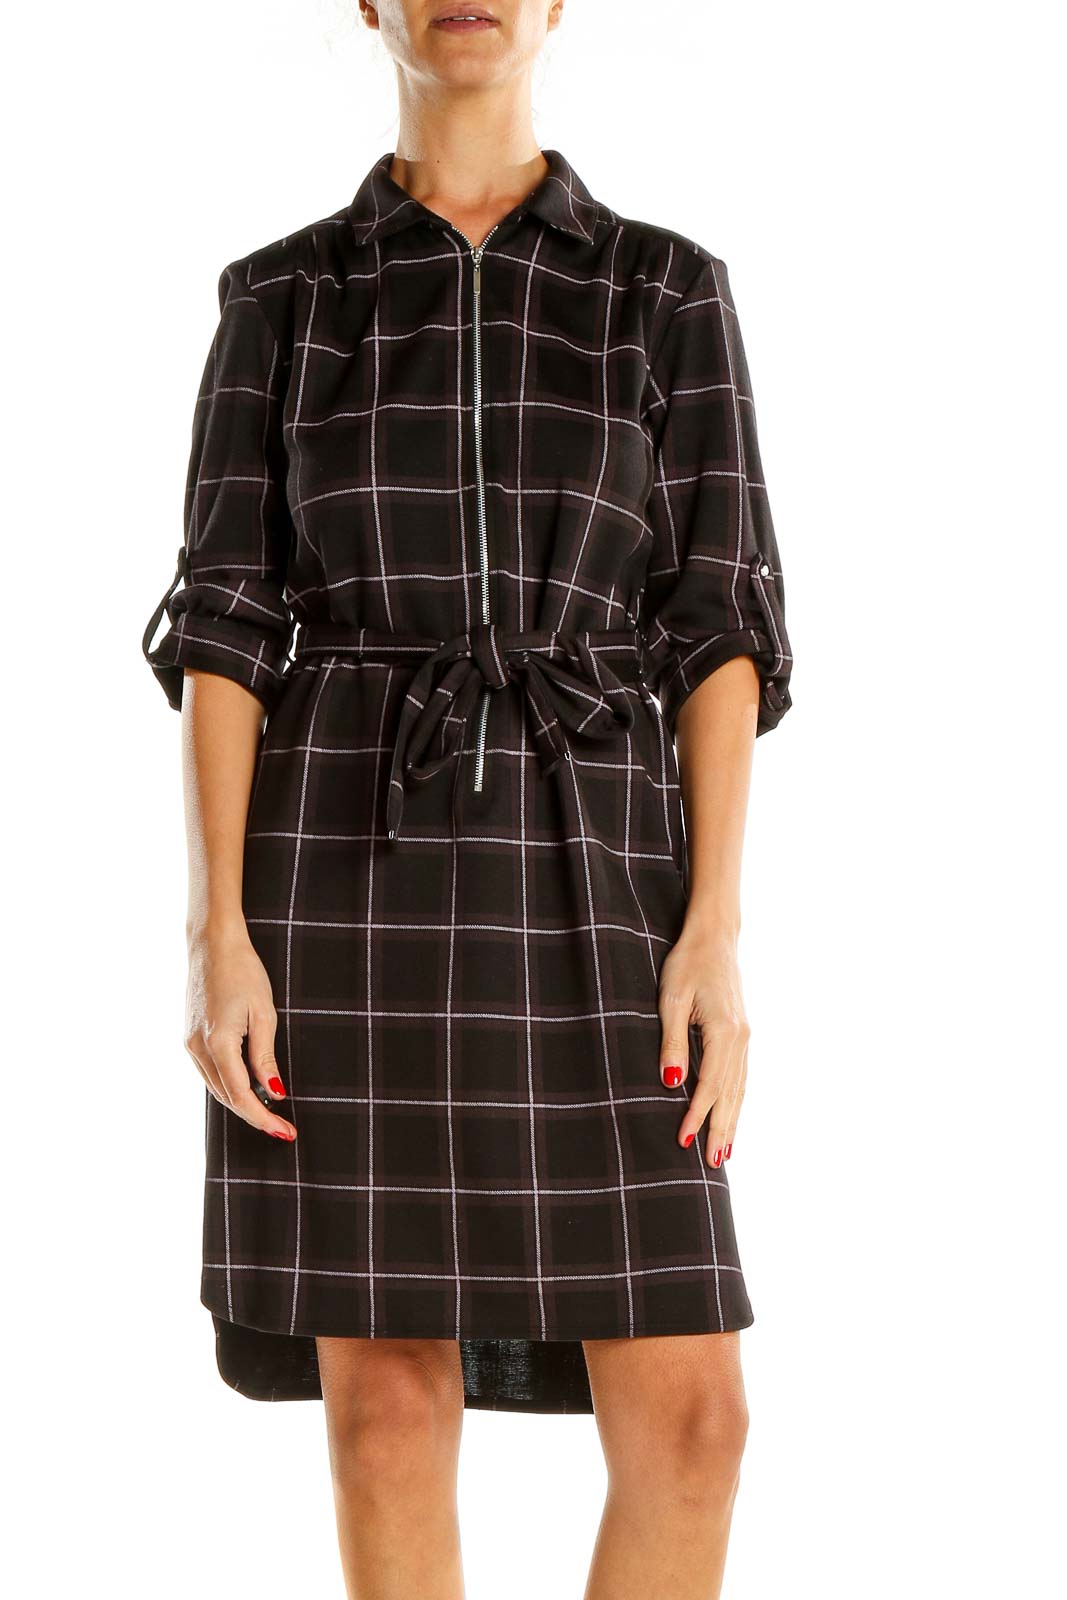 Black Checkered Casual Shirt Dress Front